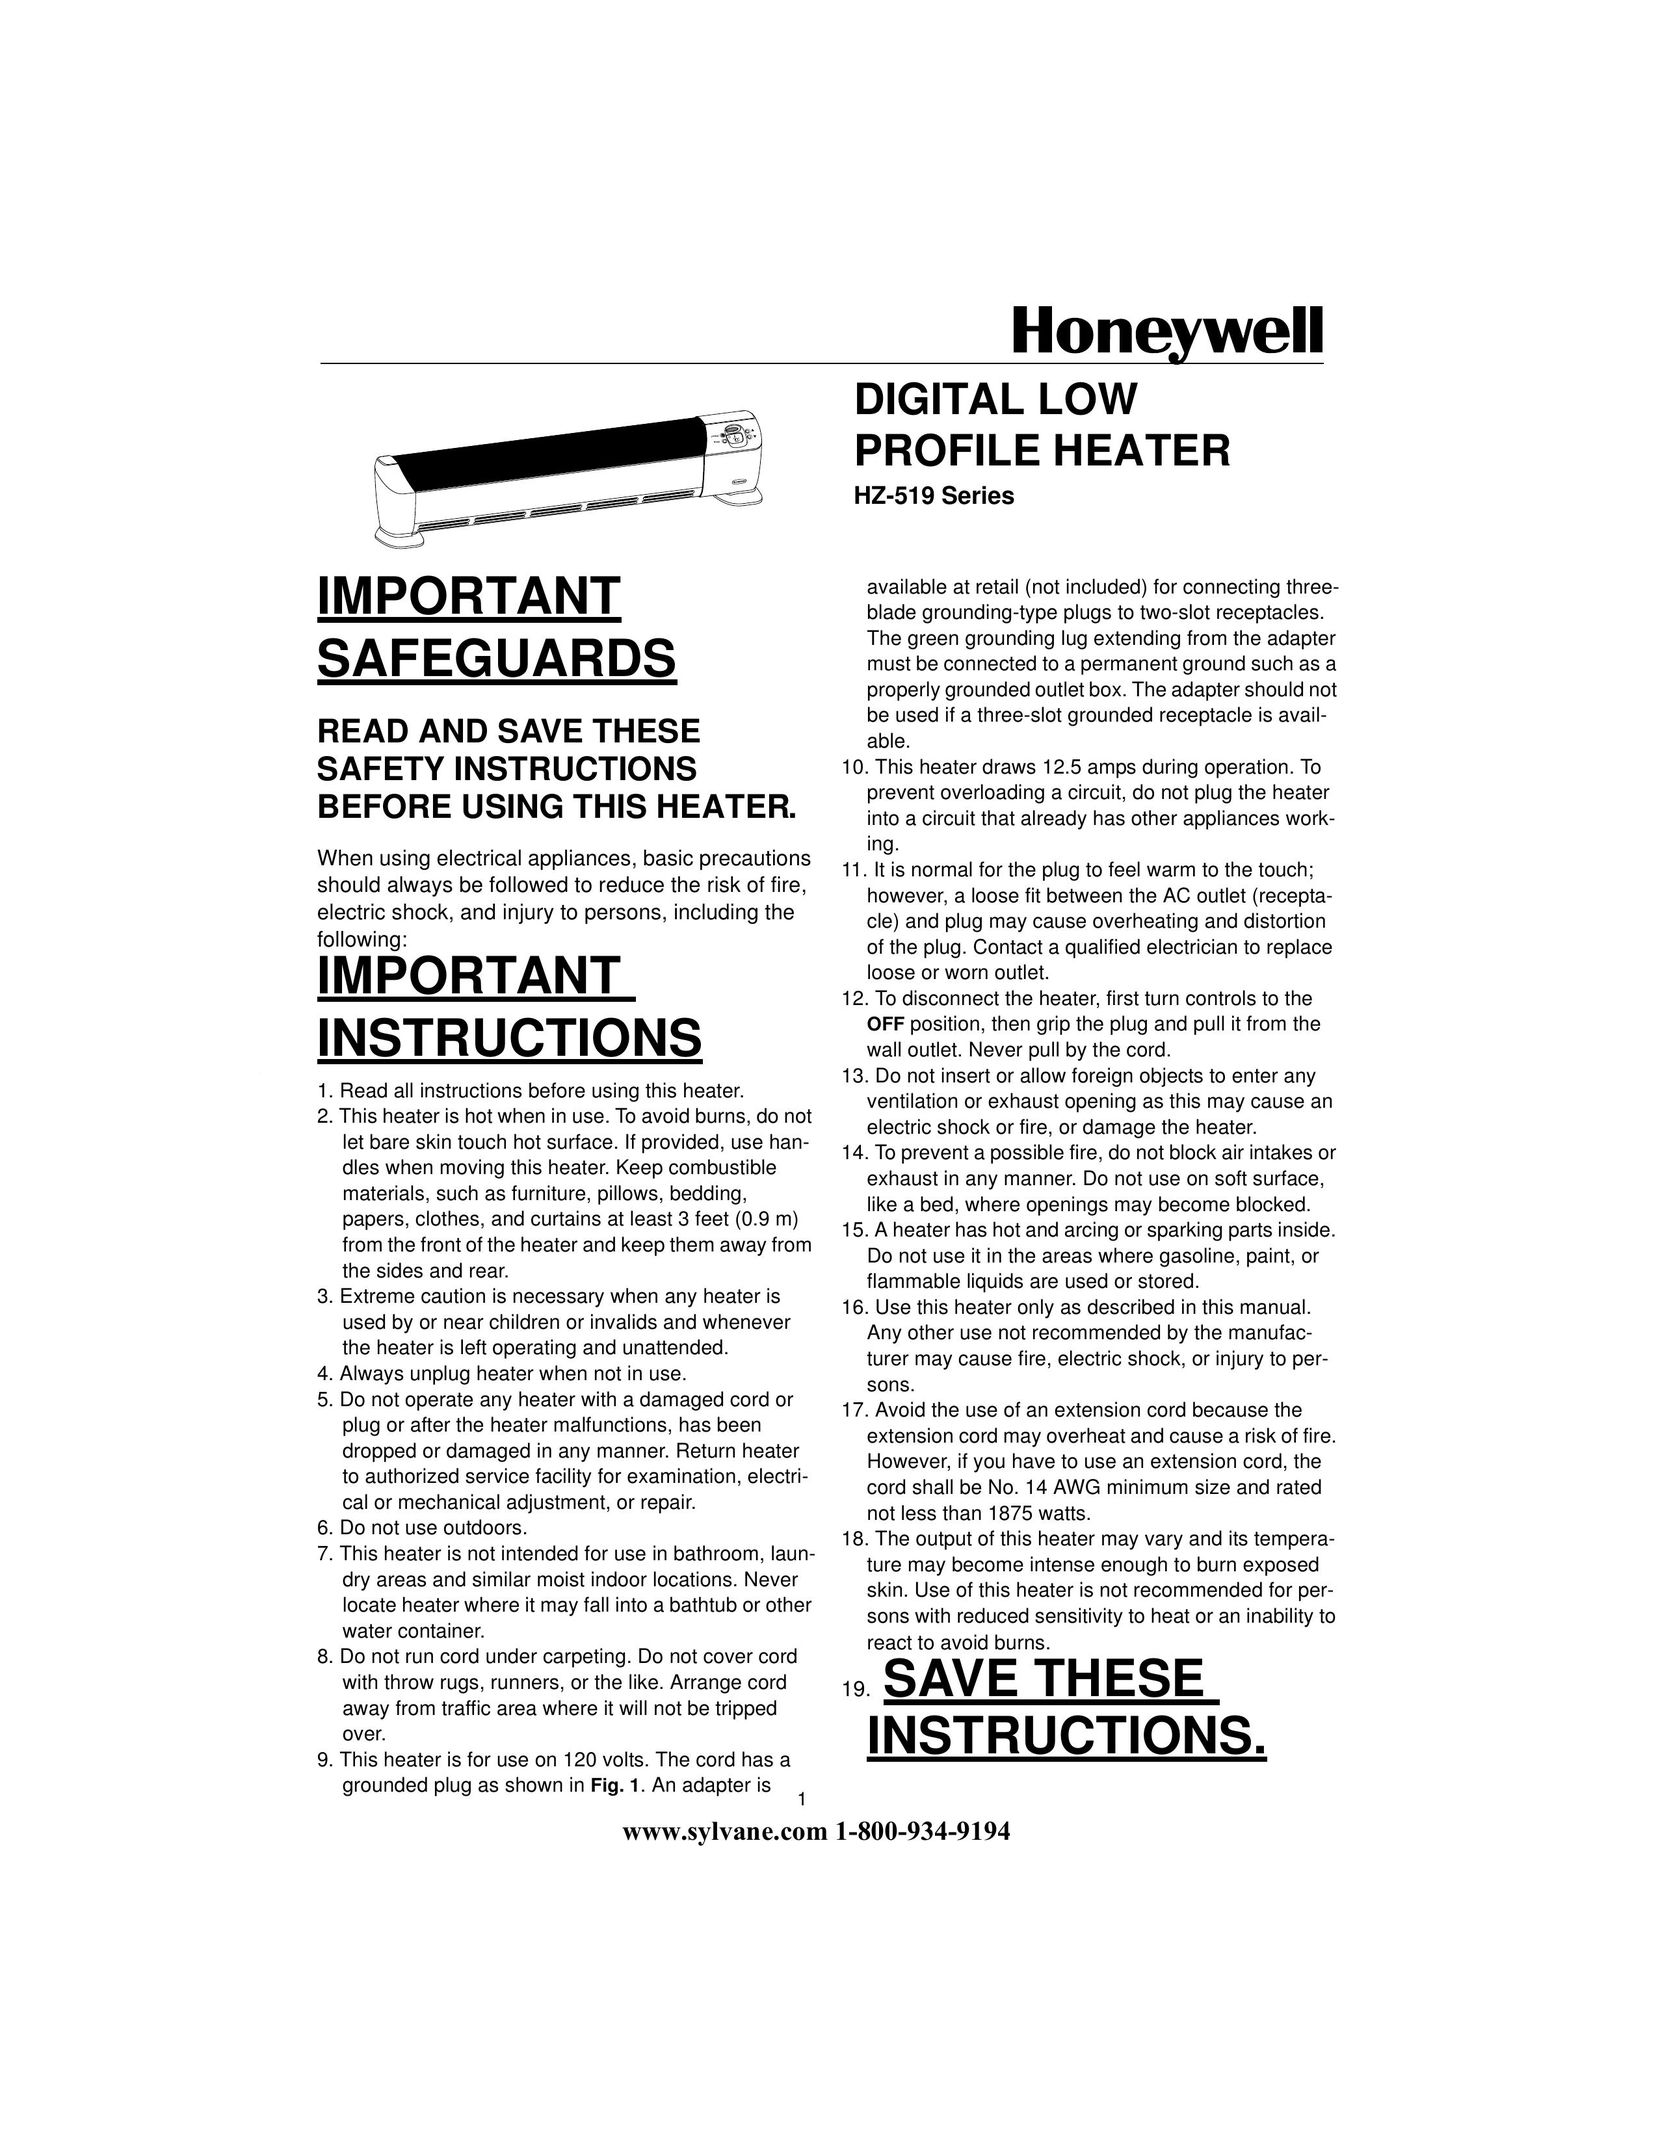 Honeywell HZ-519 Electric Heater User Manual